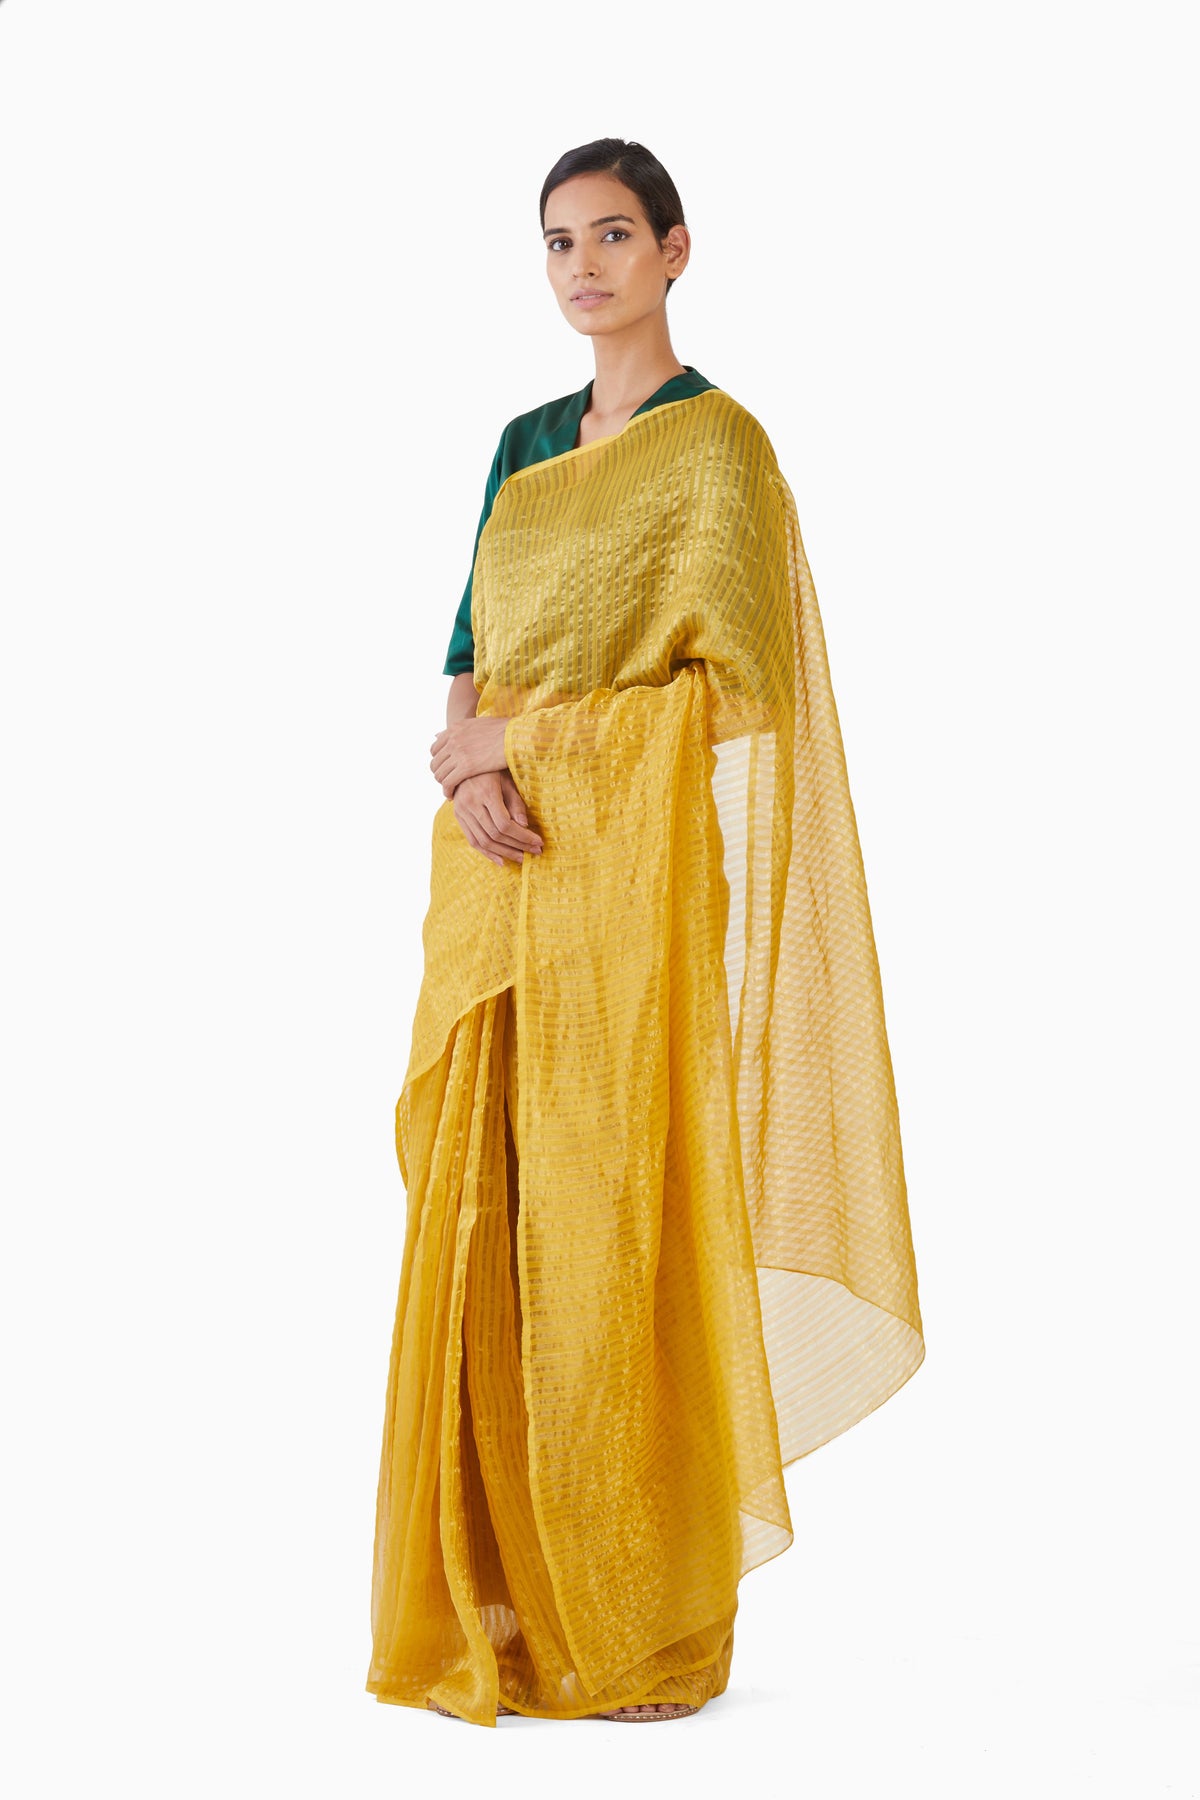 Handwoven yellow saree